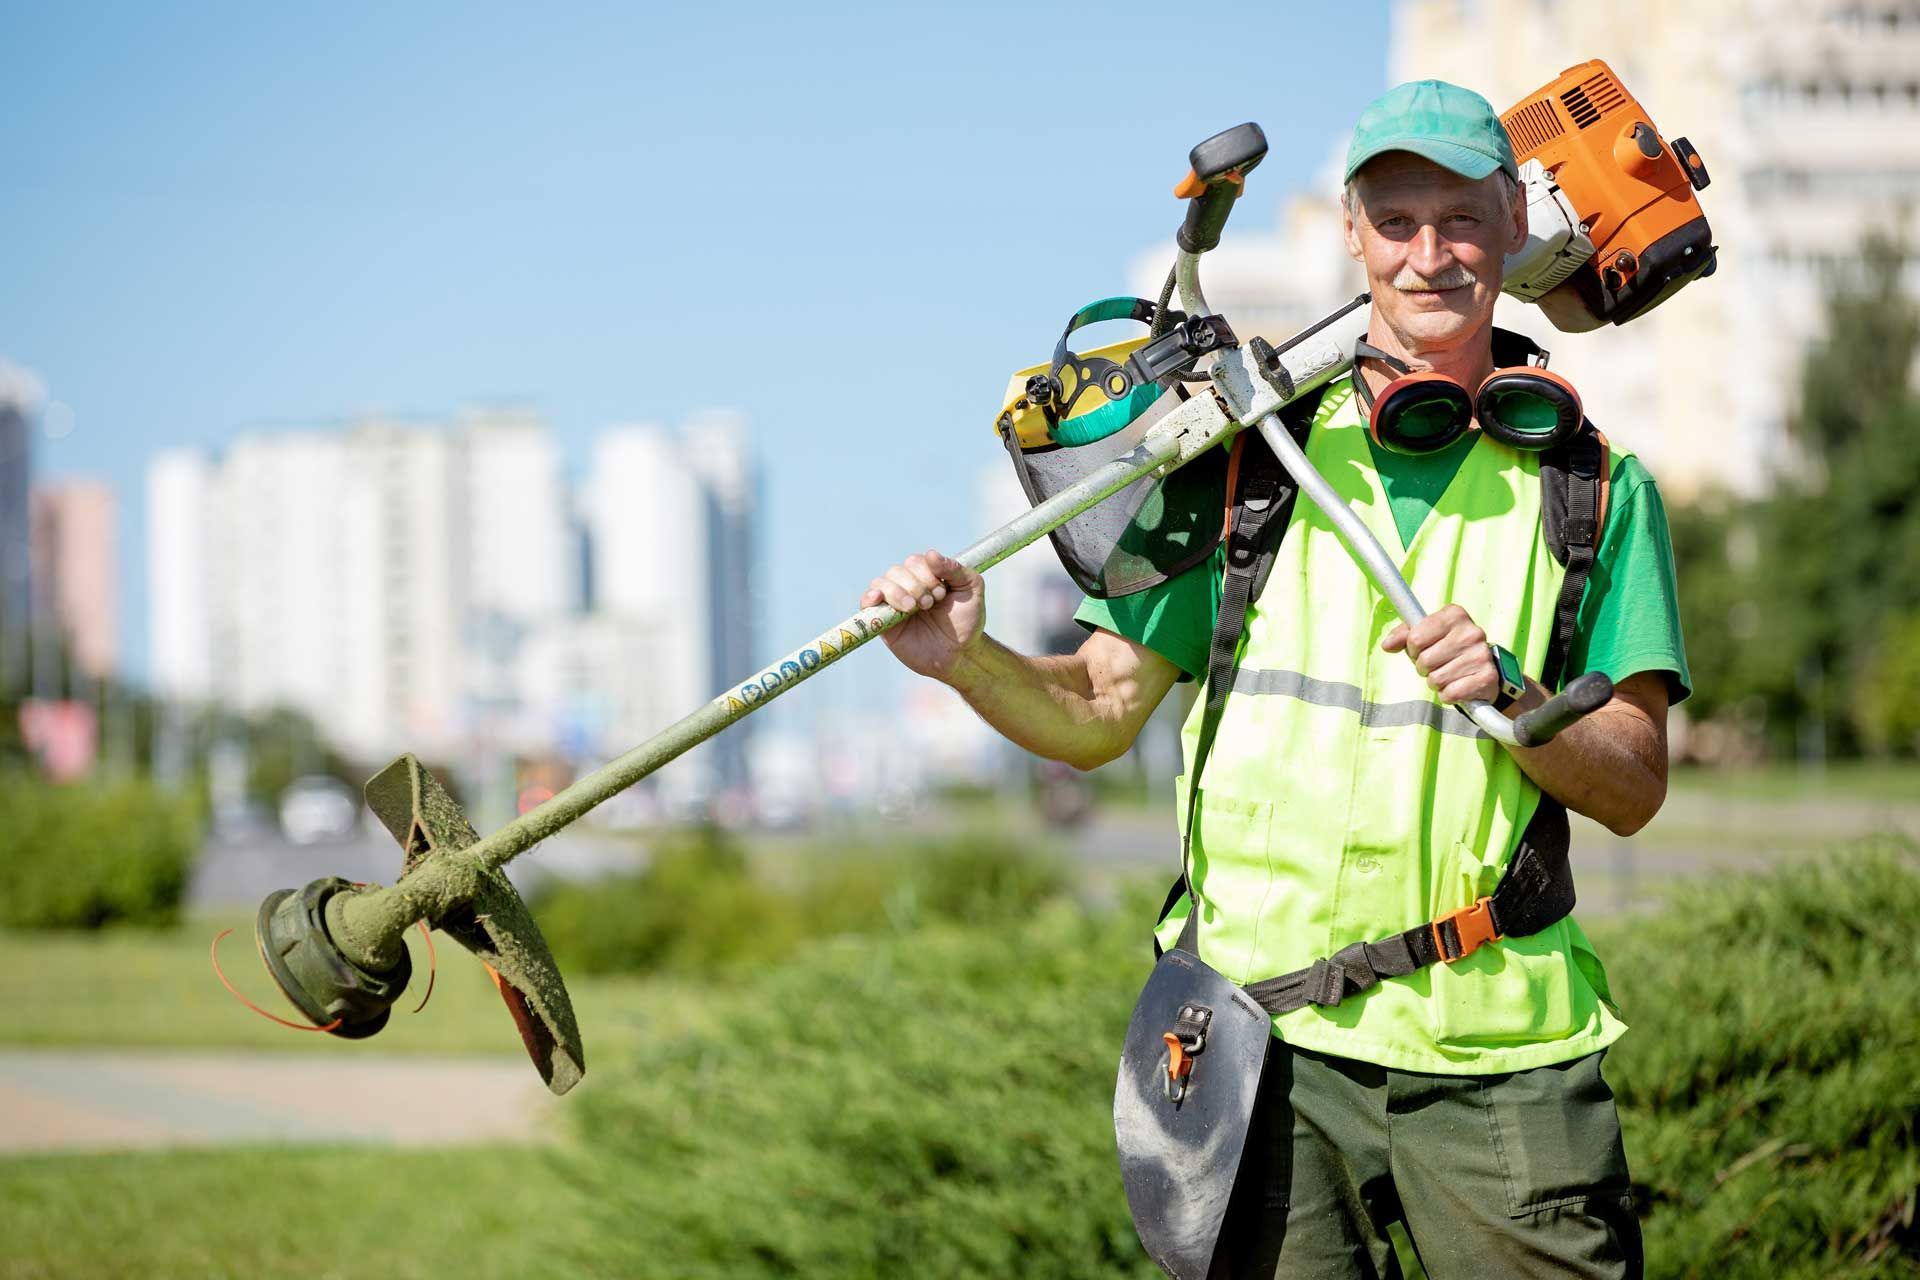 Un jardinier professionnel qui tient un rotofil dans une espace vert urbain